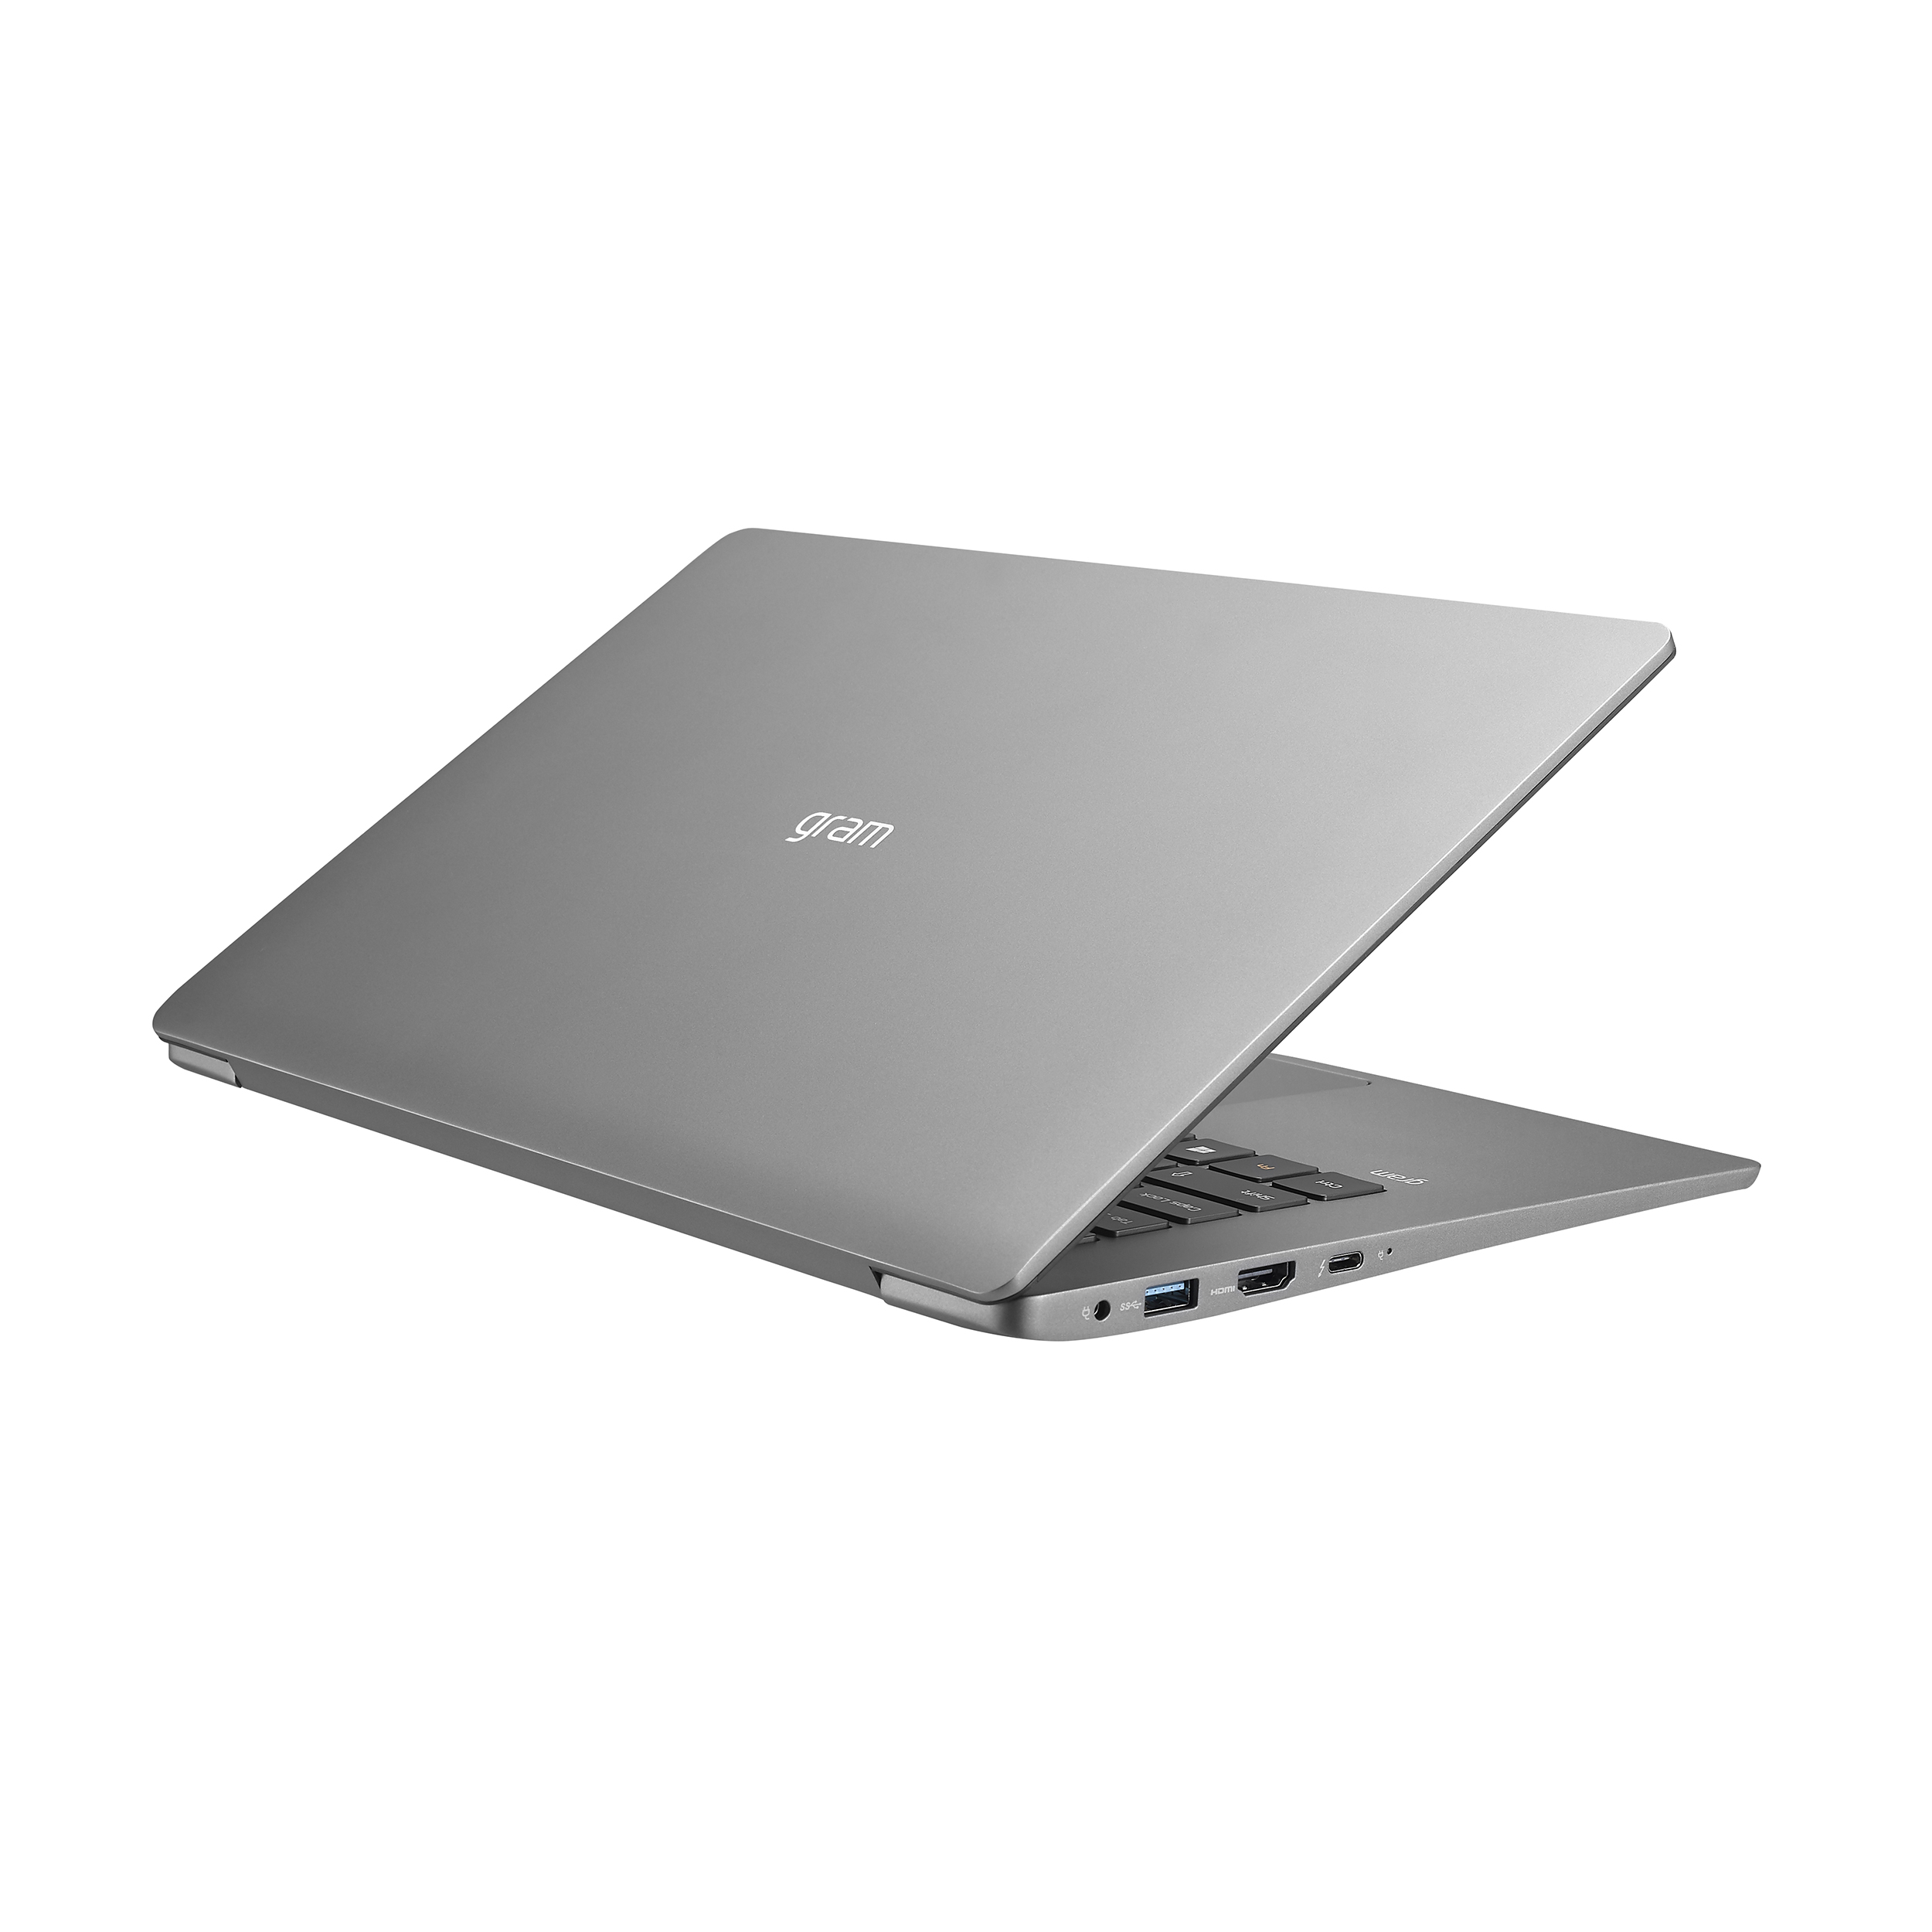 LG gram 14 inch Ultra-Lightweight Laptop with 10th Gen Intel Core Processor w/Intel Iris Plus - 14Z90N-U.AAS7U1 - image 10 of 13